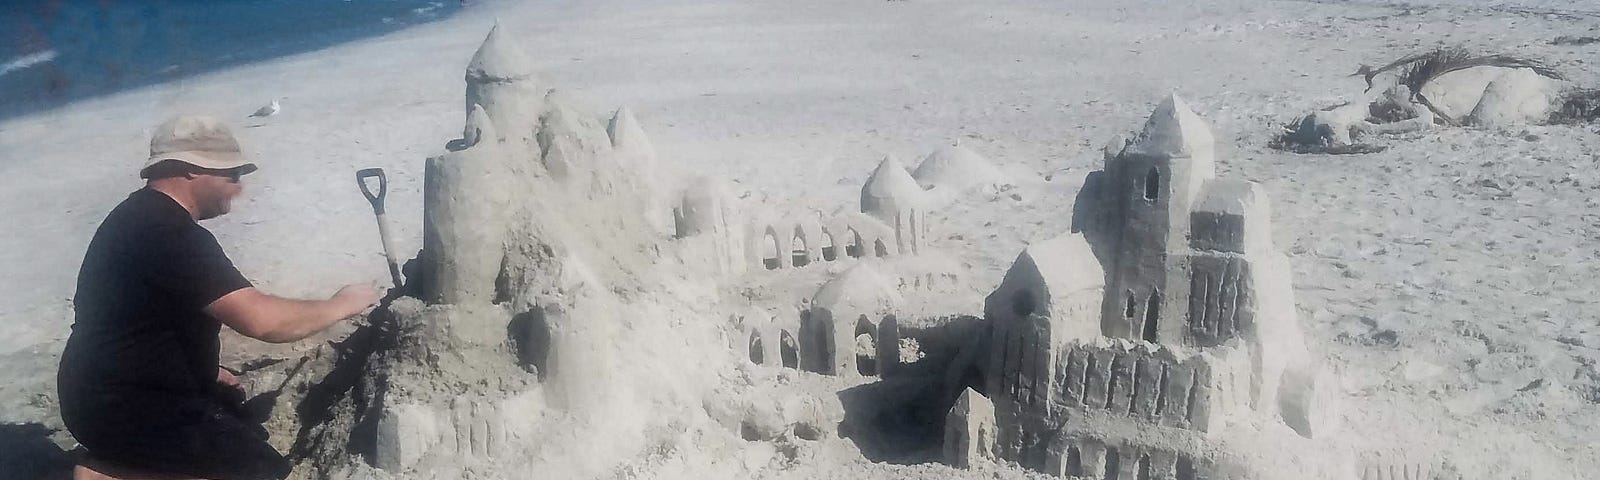 Club Fed sand castle